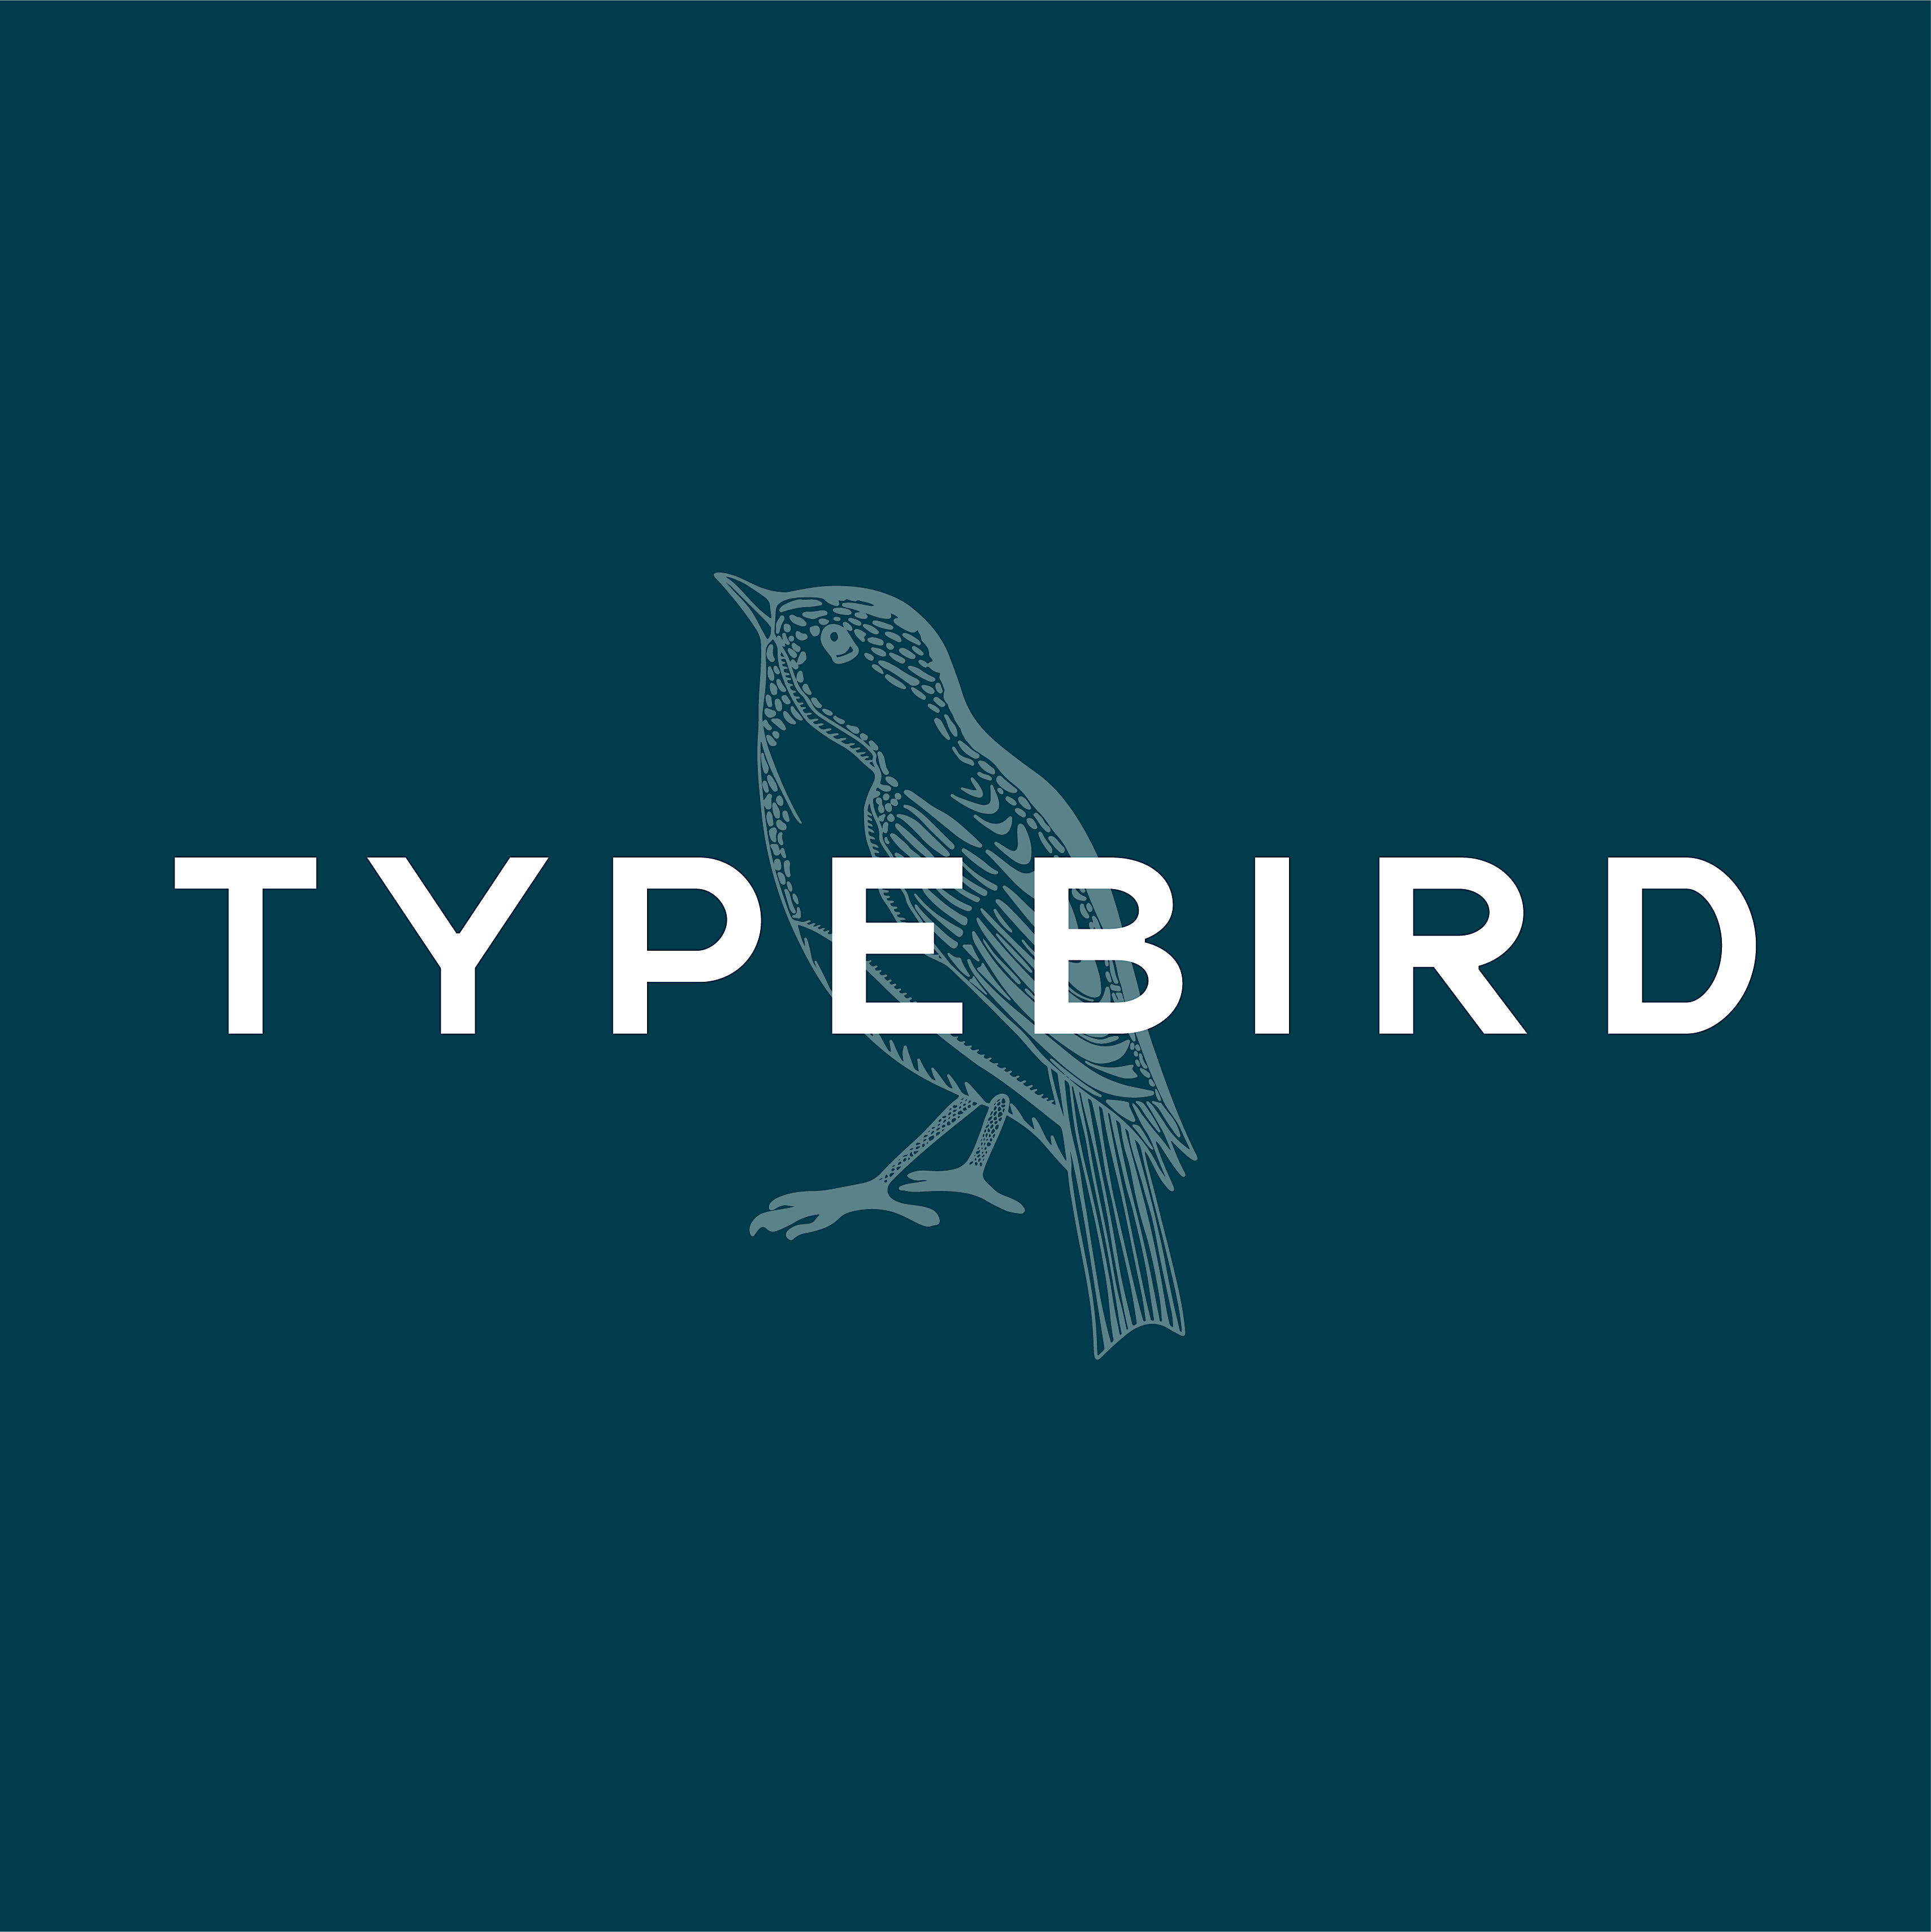 Typebird Creative